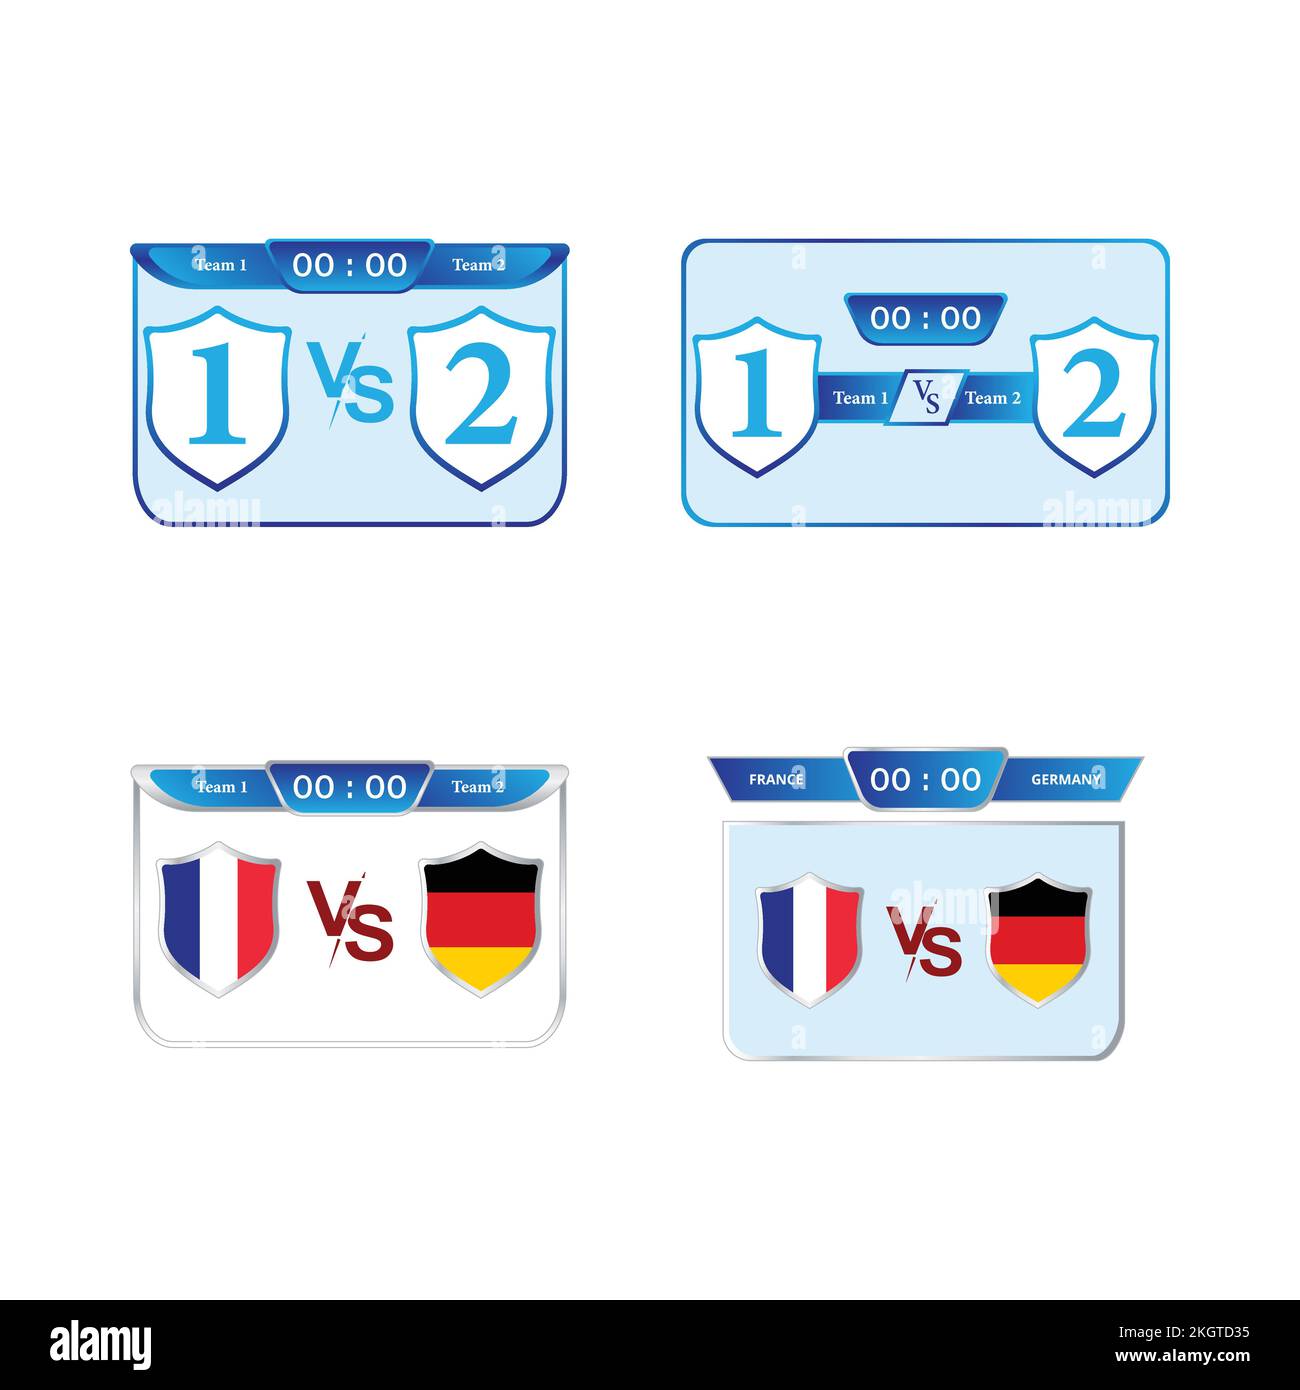 Sports scoreboard design collection. Soccer game scoreboard vector. Germany VS France football match scoreboard with flag illustration. Stock Vector